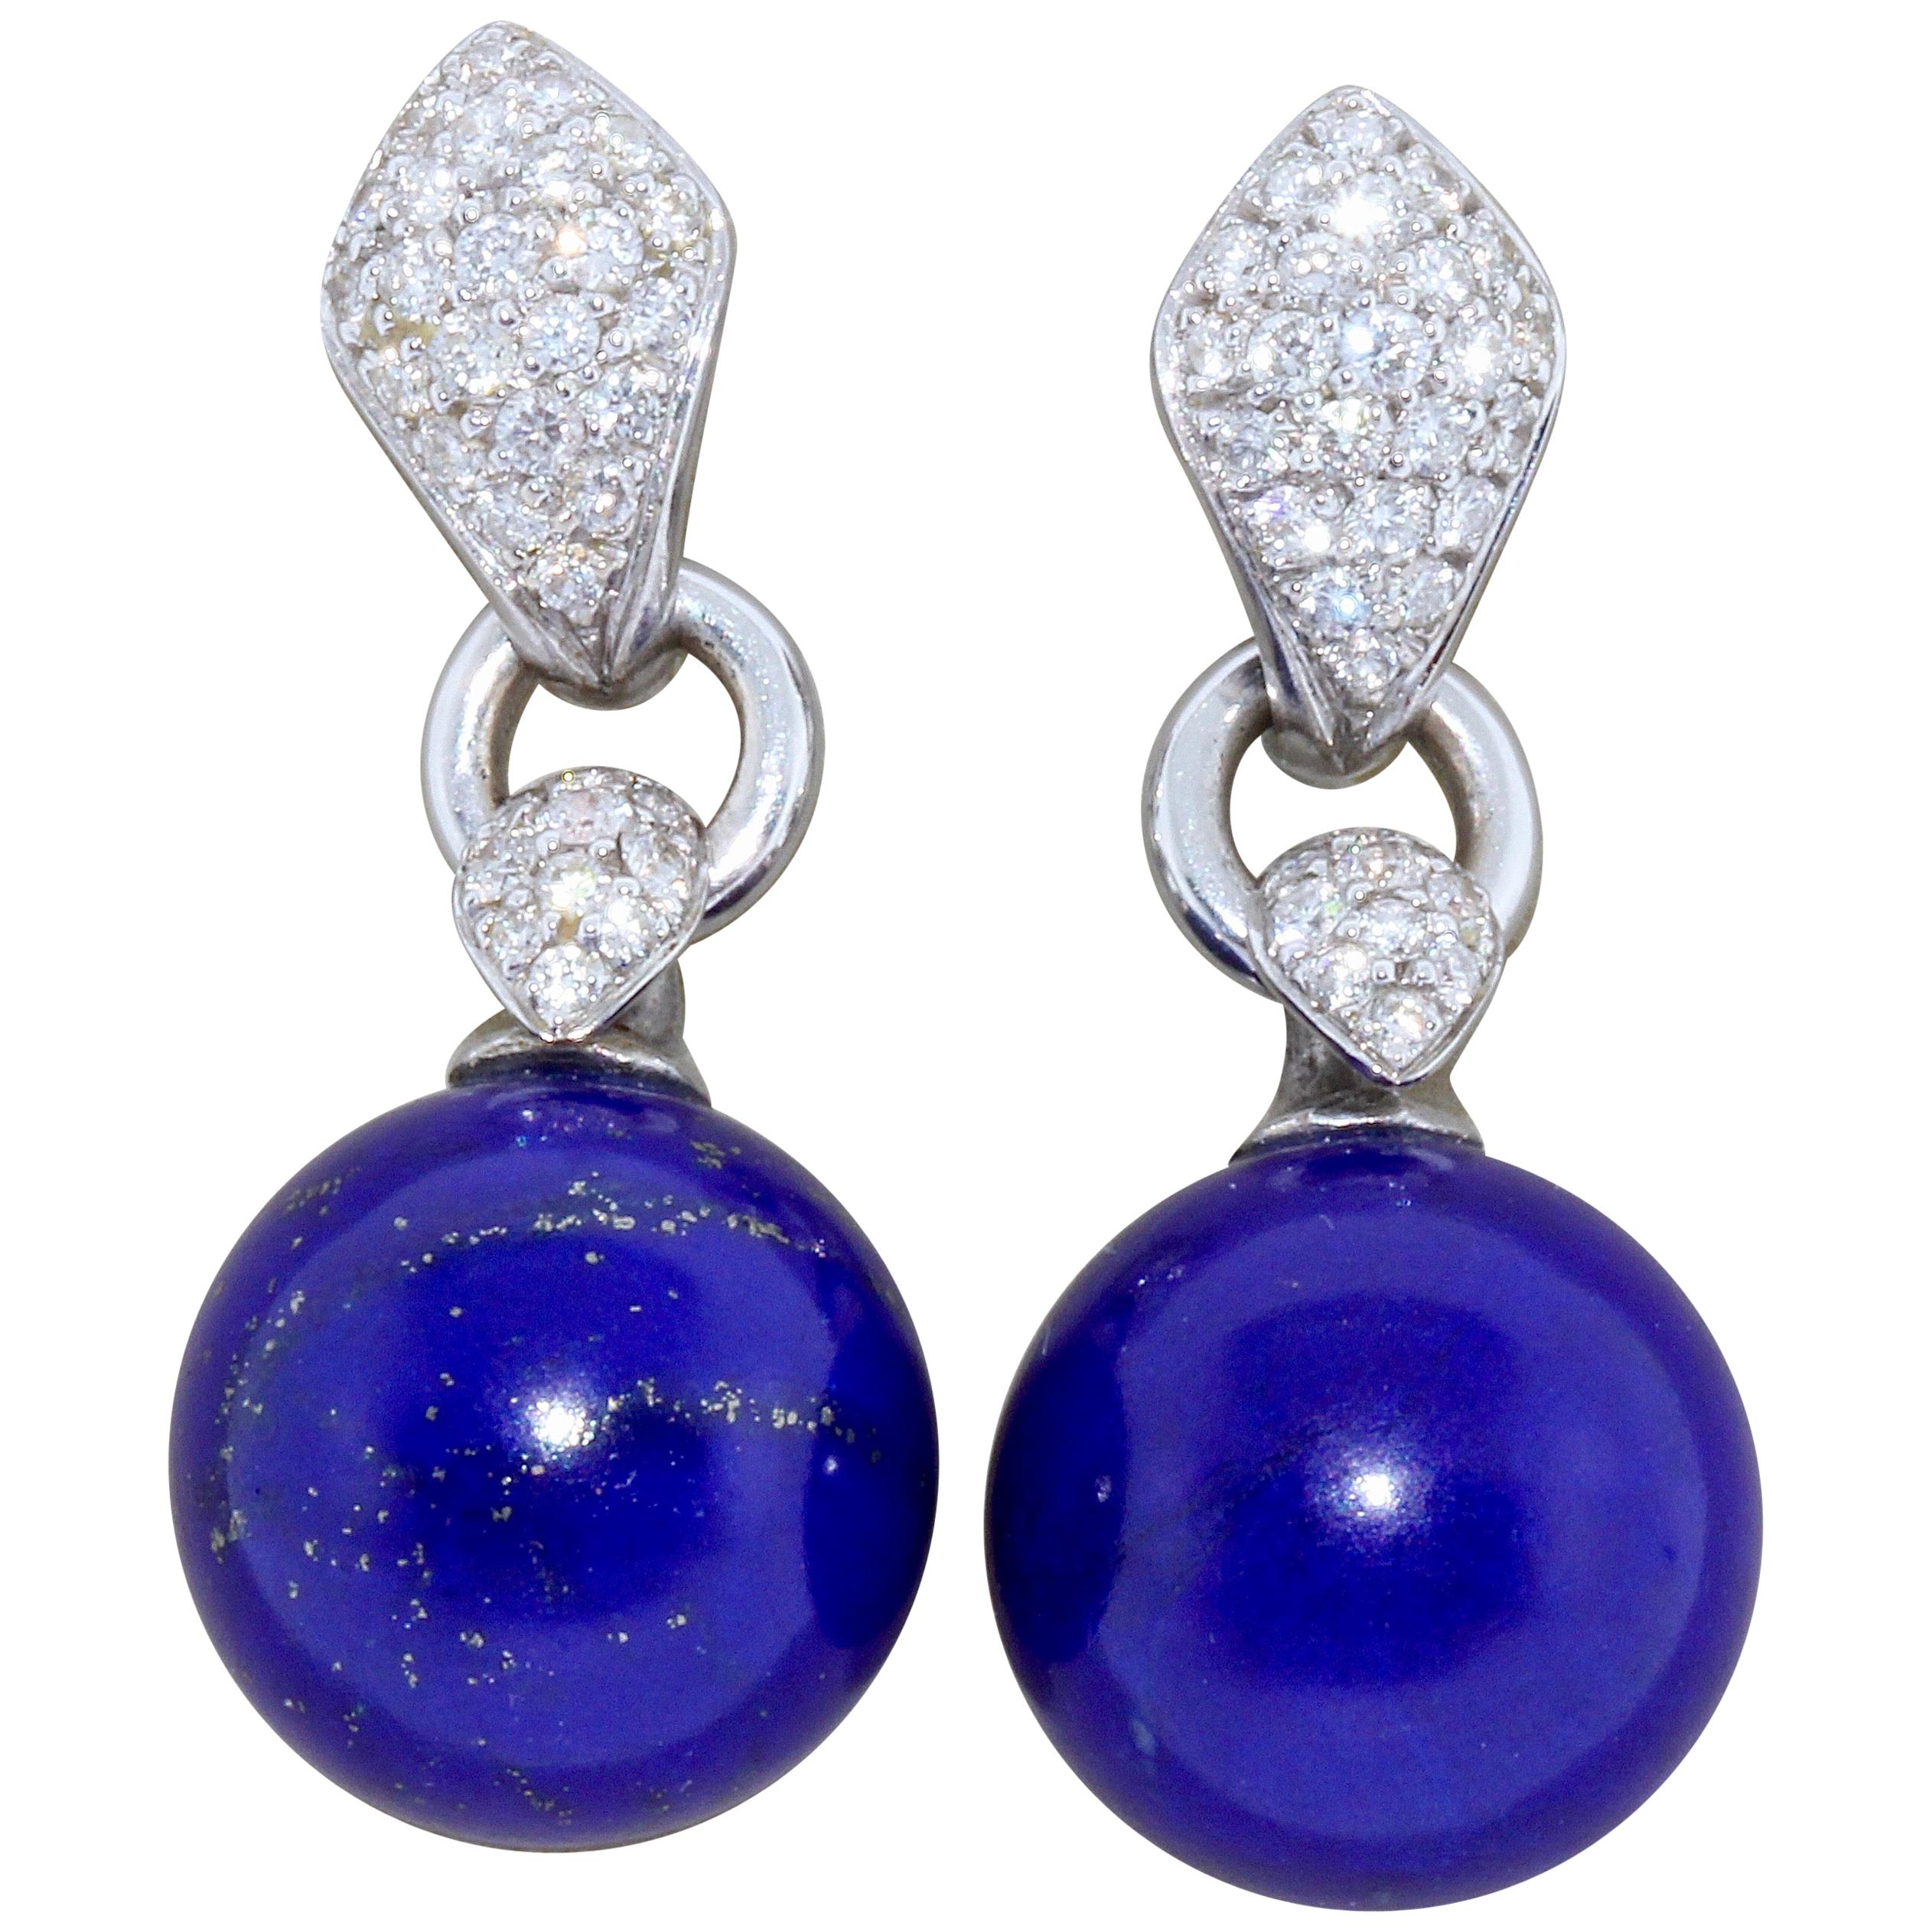 18 Karat White Gold Lapis Lazuli Stud Earrings with Diamonds, by Utopia For Sale